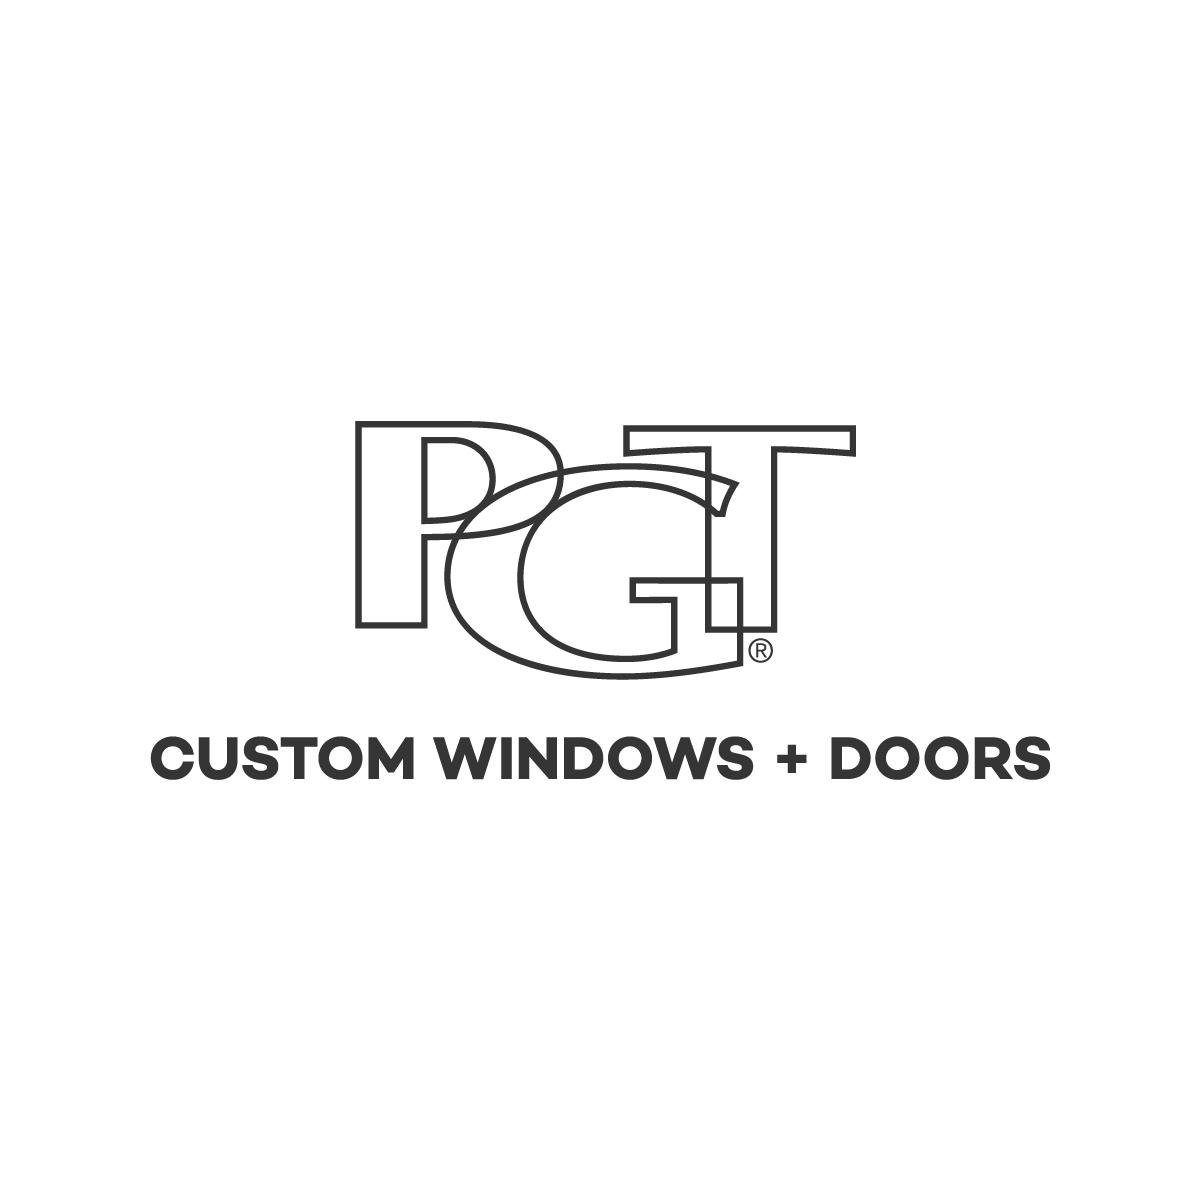 Balck White Windows Logo - Logos - PGT Impact Resistant Hurricane Windows and Doors